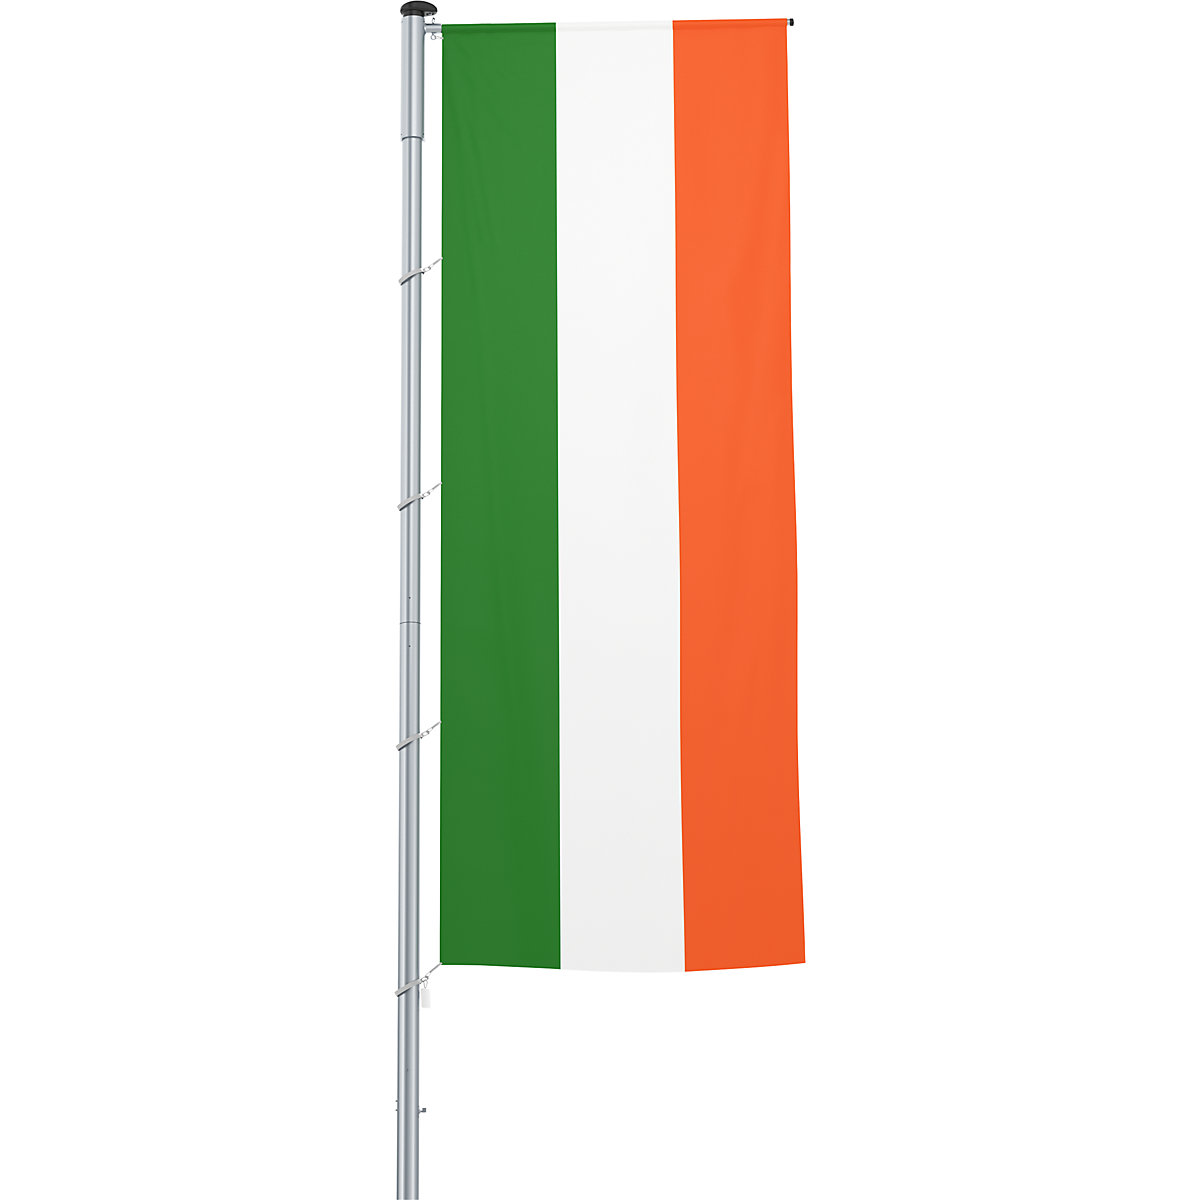 Steag pentru braț/drapel național – Mannus, format 1,2 x 3 m, Irlanda-21